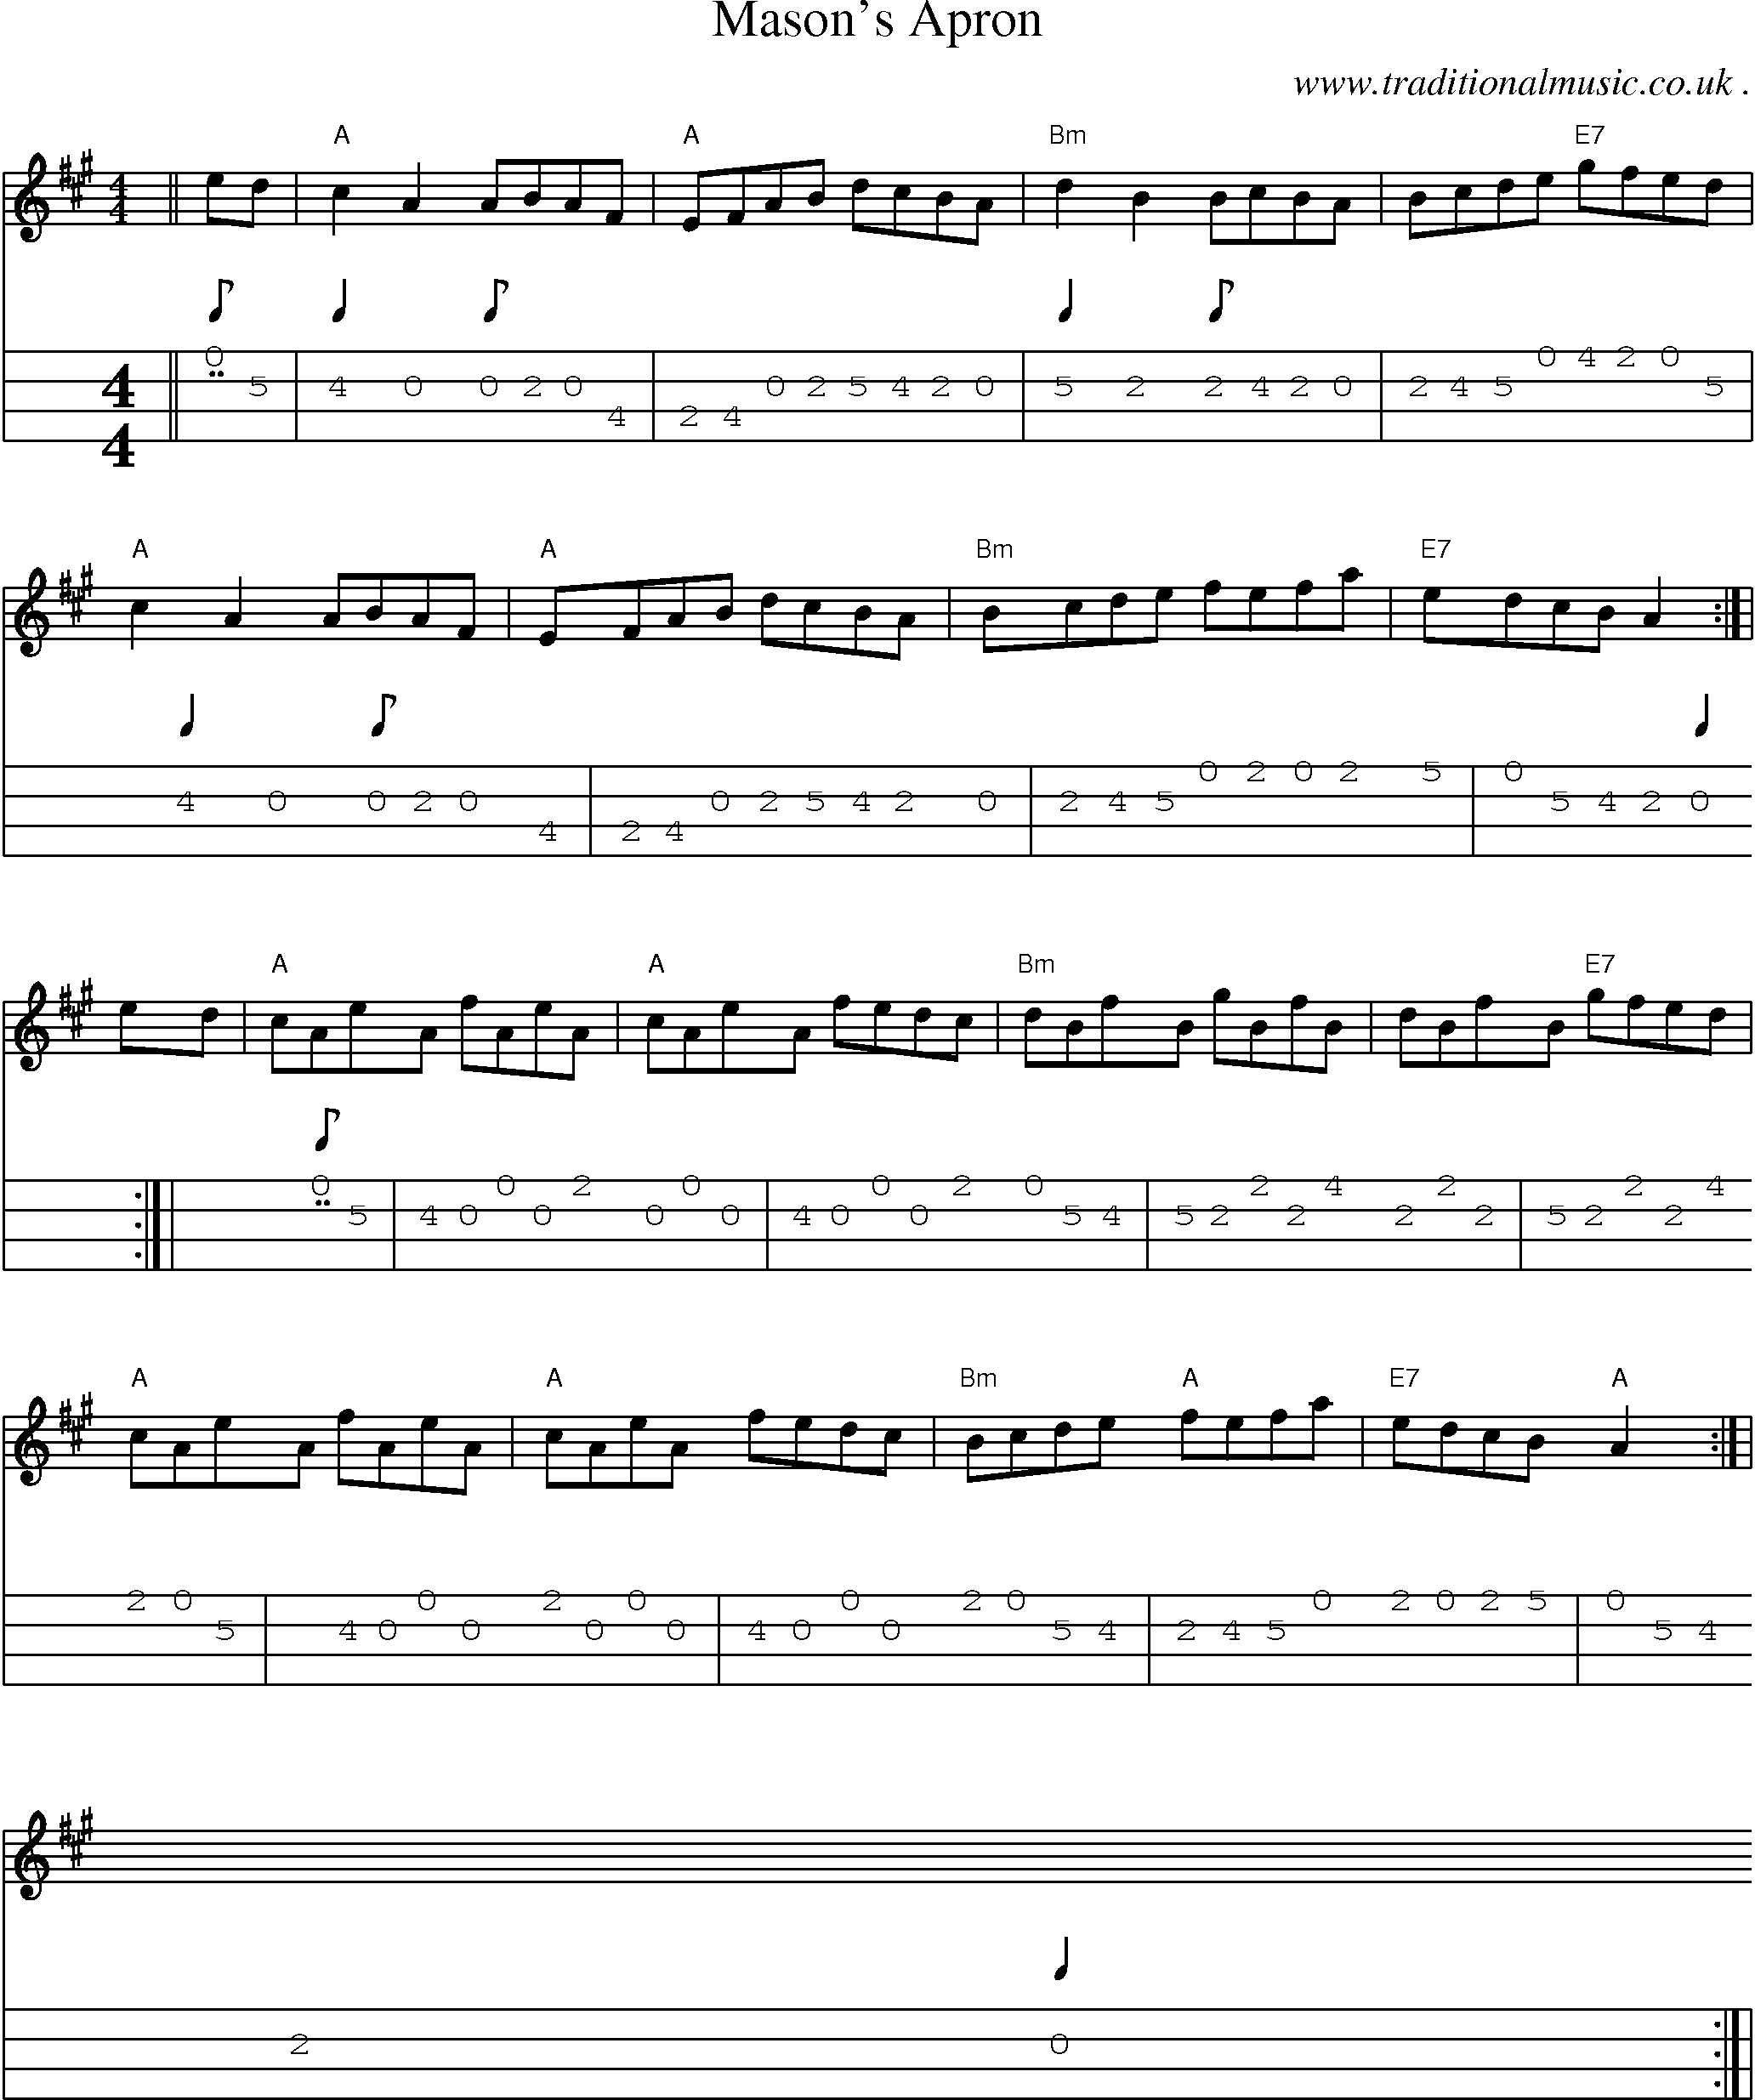 Sheet-music  score, Chords and Mandolin Tabs for Masons Apron1